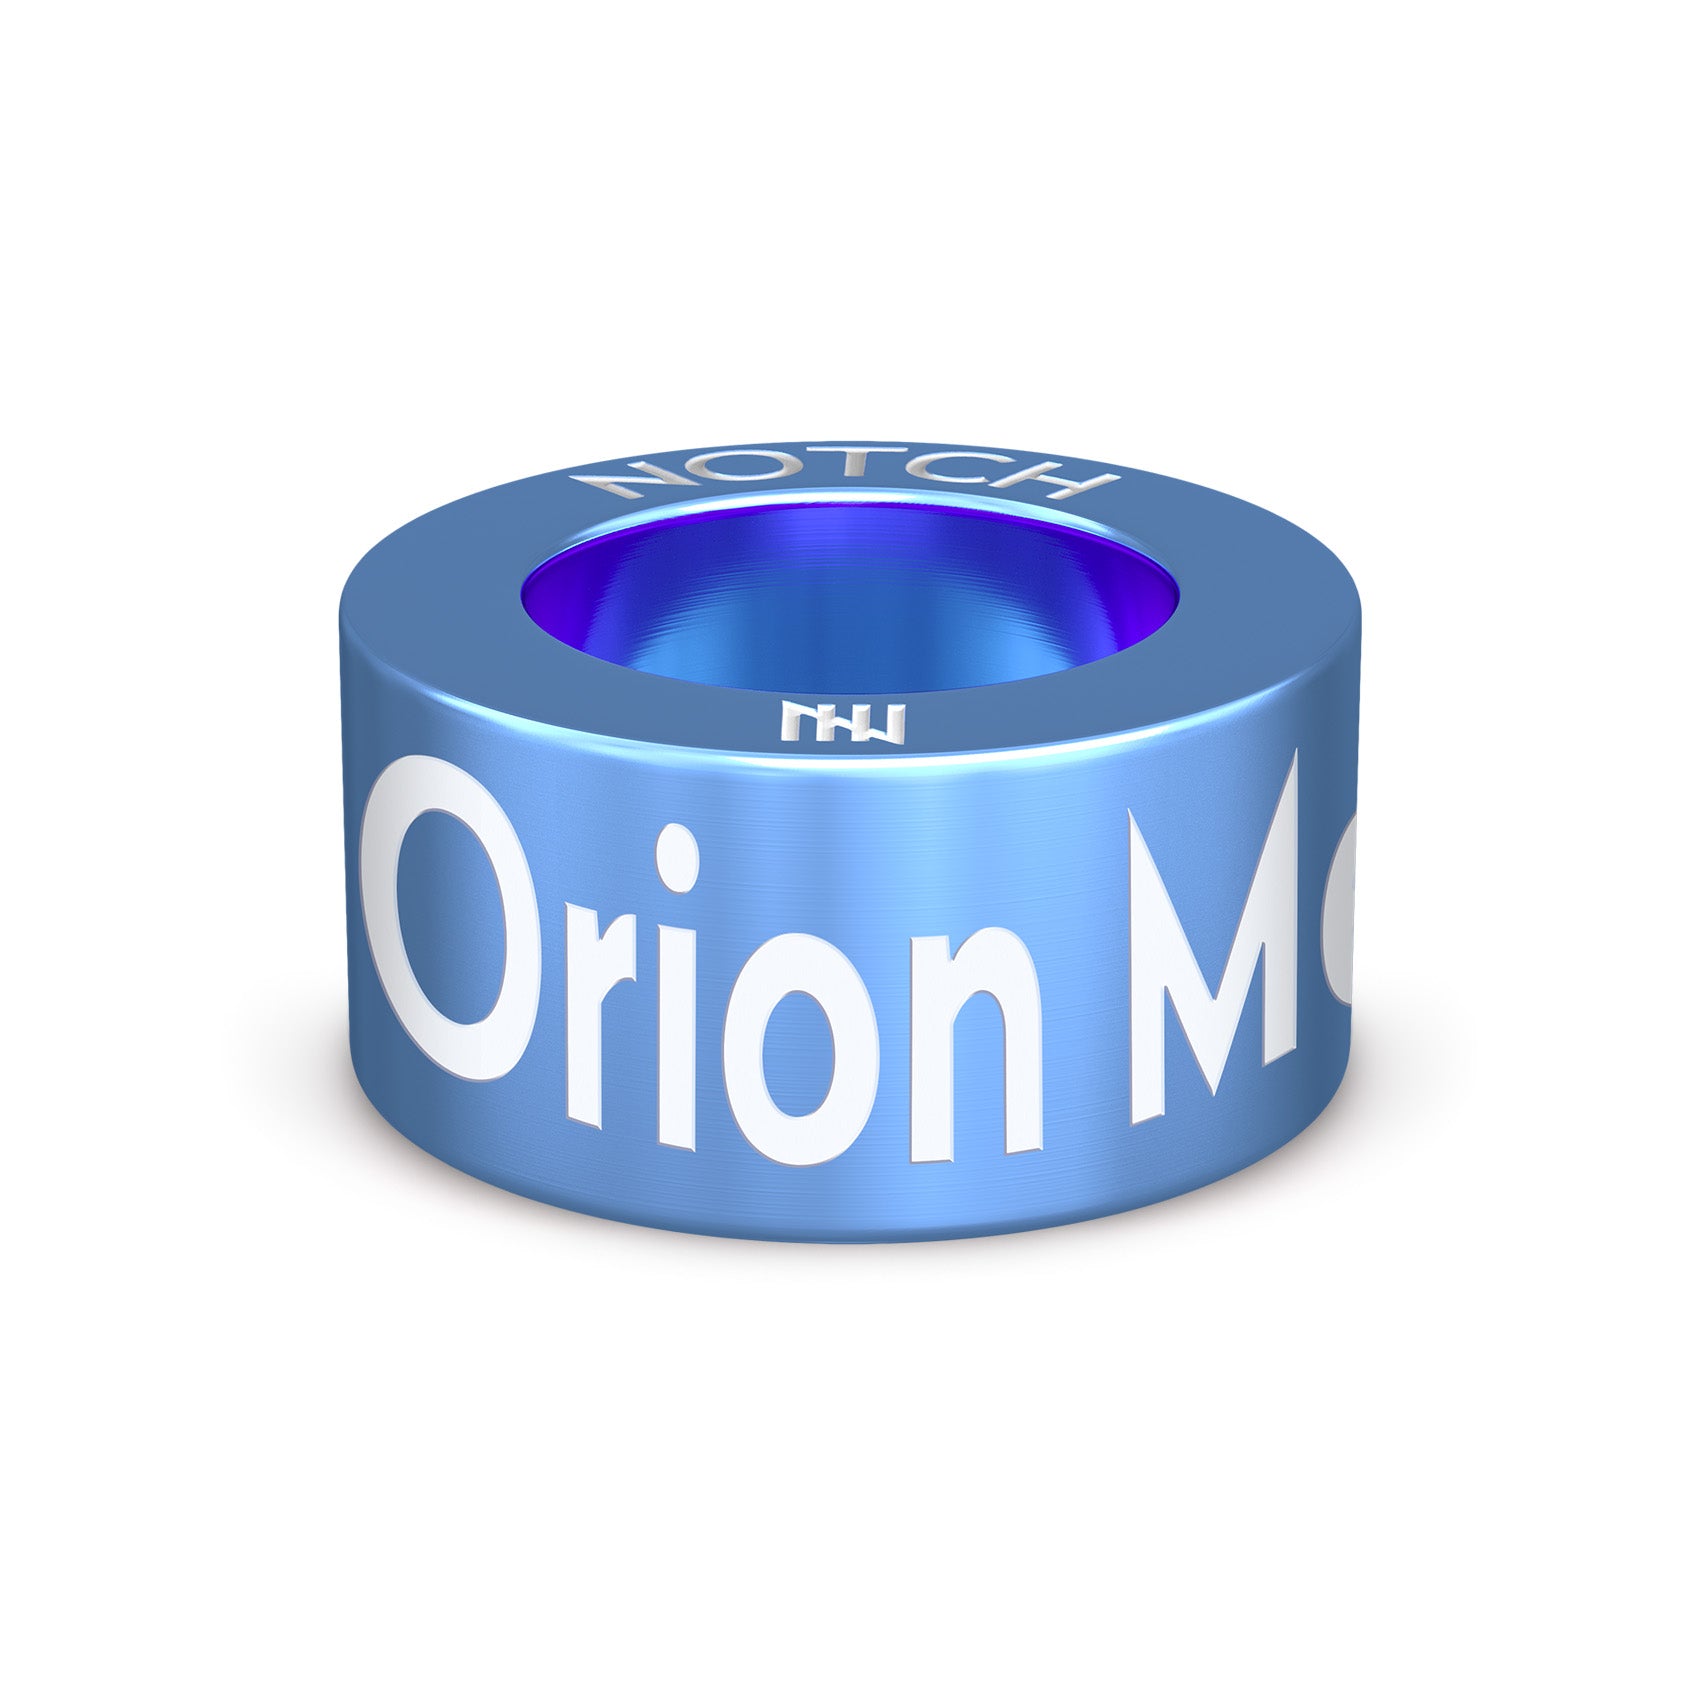 Orion Mercury NOTCH Charm